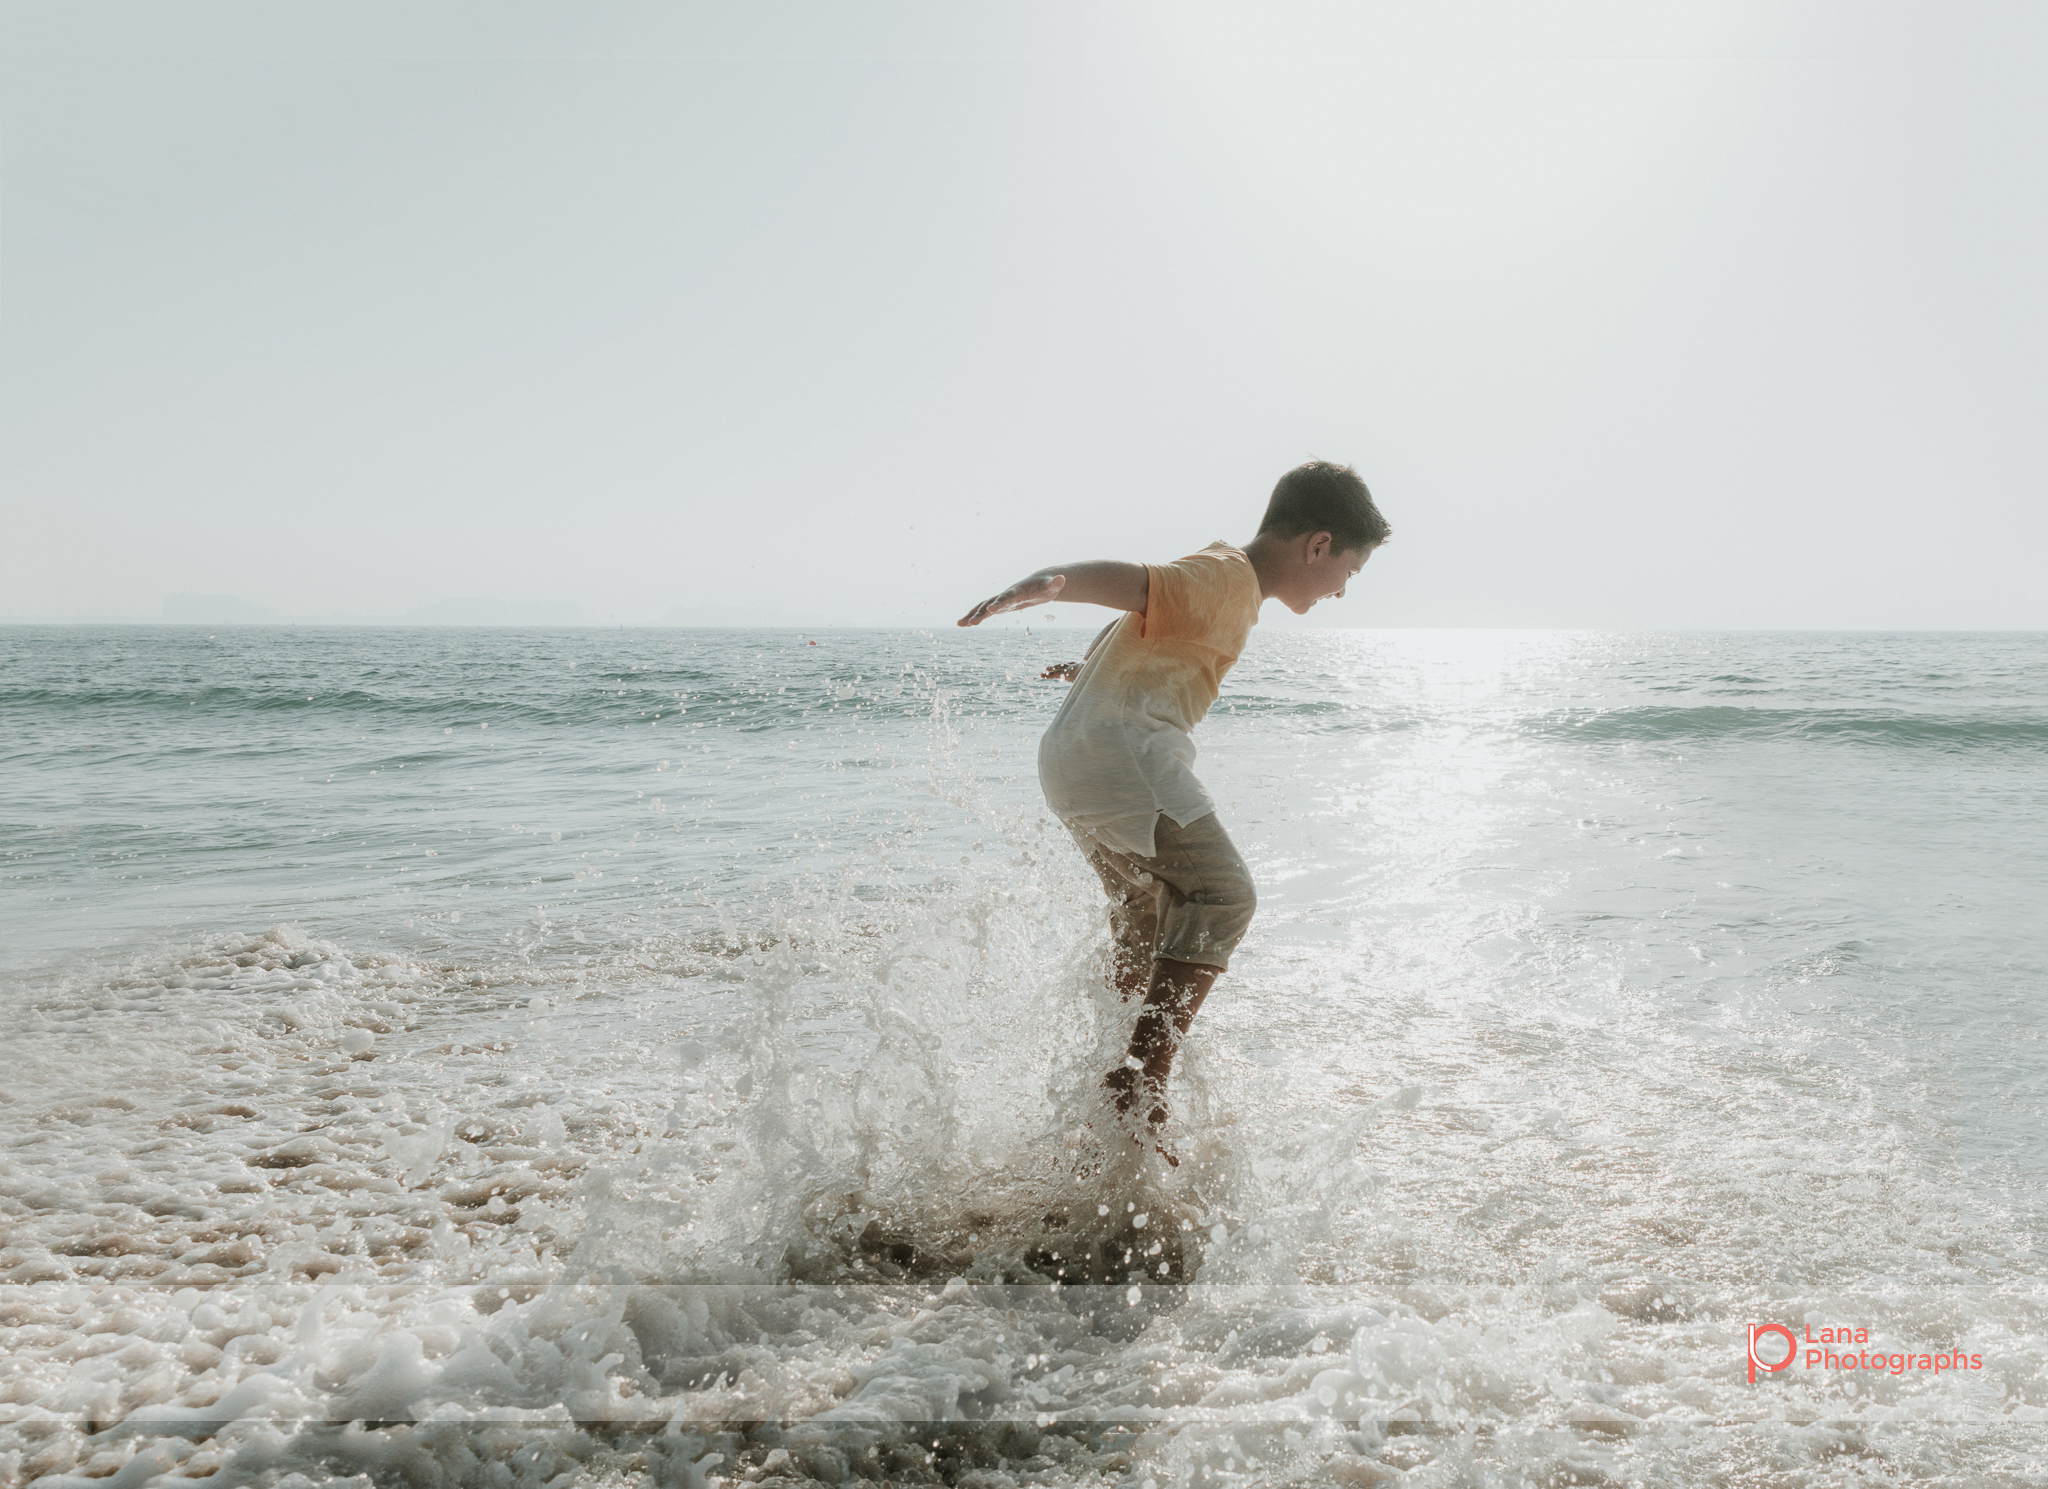  Lana Photographs Dubai Family Photography beach photoshoot young boy splashing in the water 